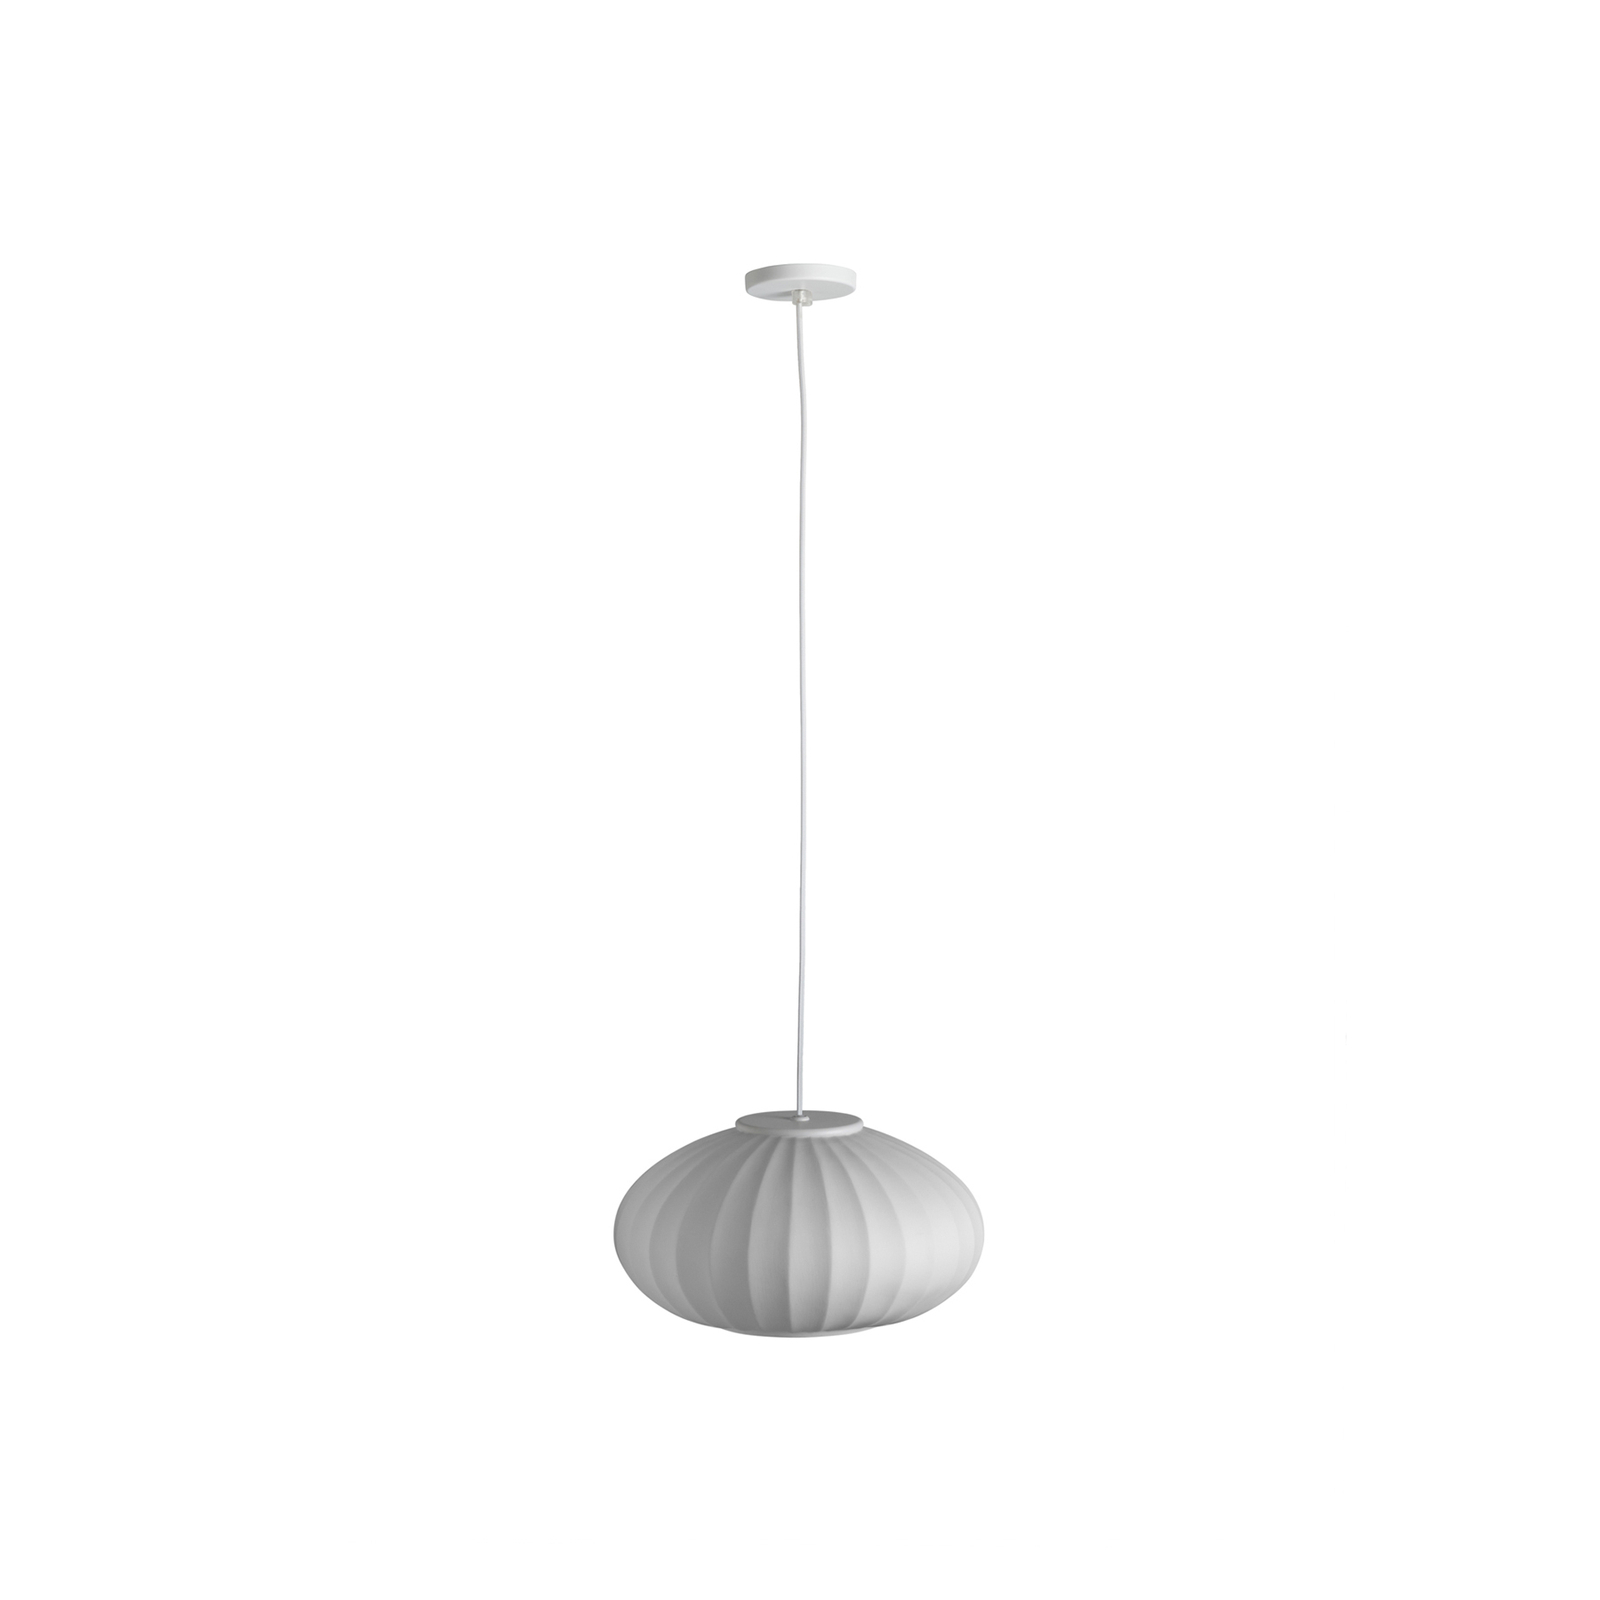 Mei pendant light, flat oval lampshade, white